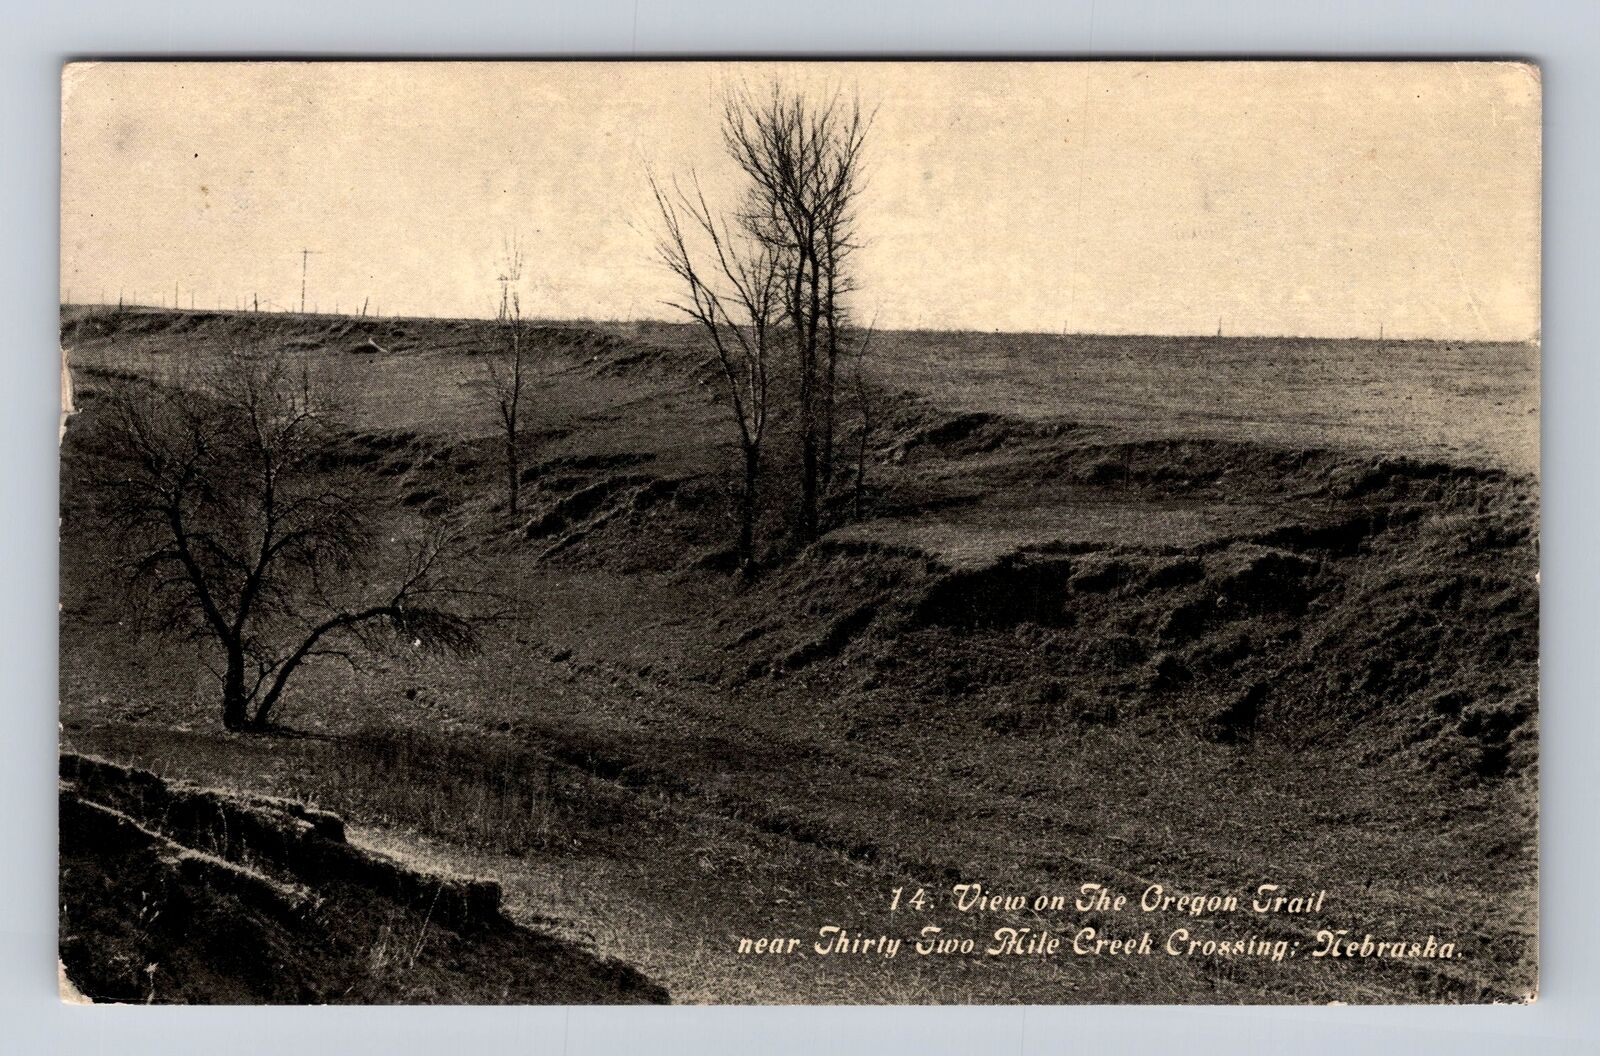 Mile Creek Crossing NE-Nebraska, Scenic View on Oregon Trail, Vintage Postcard